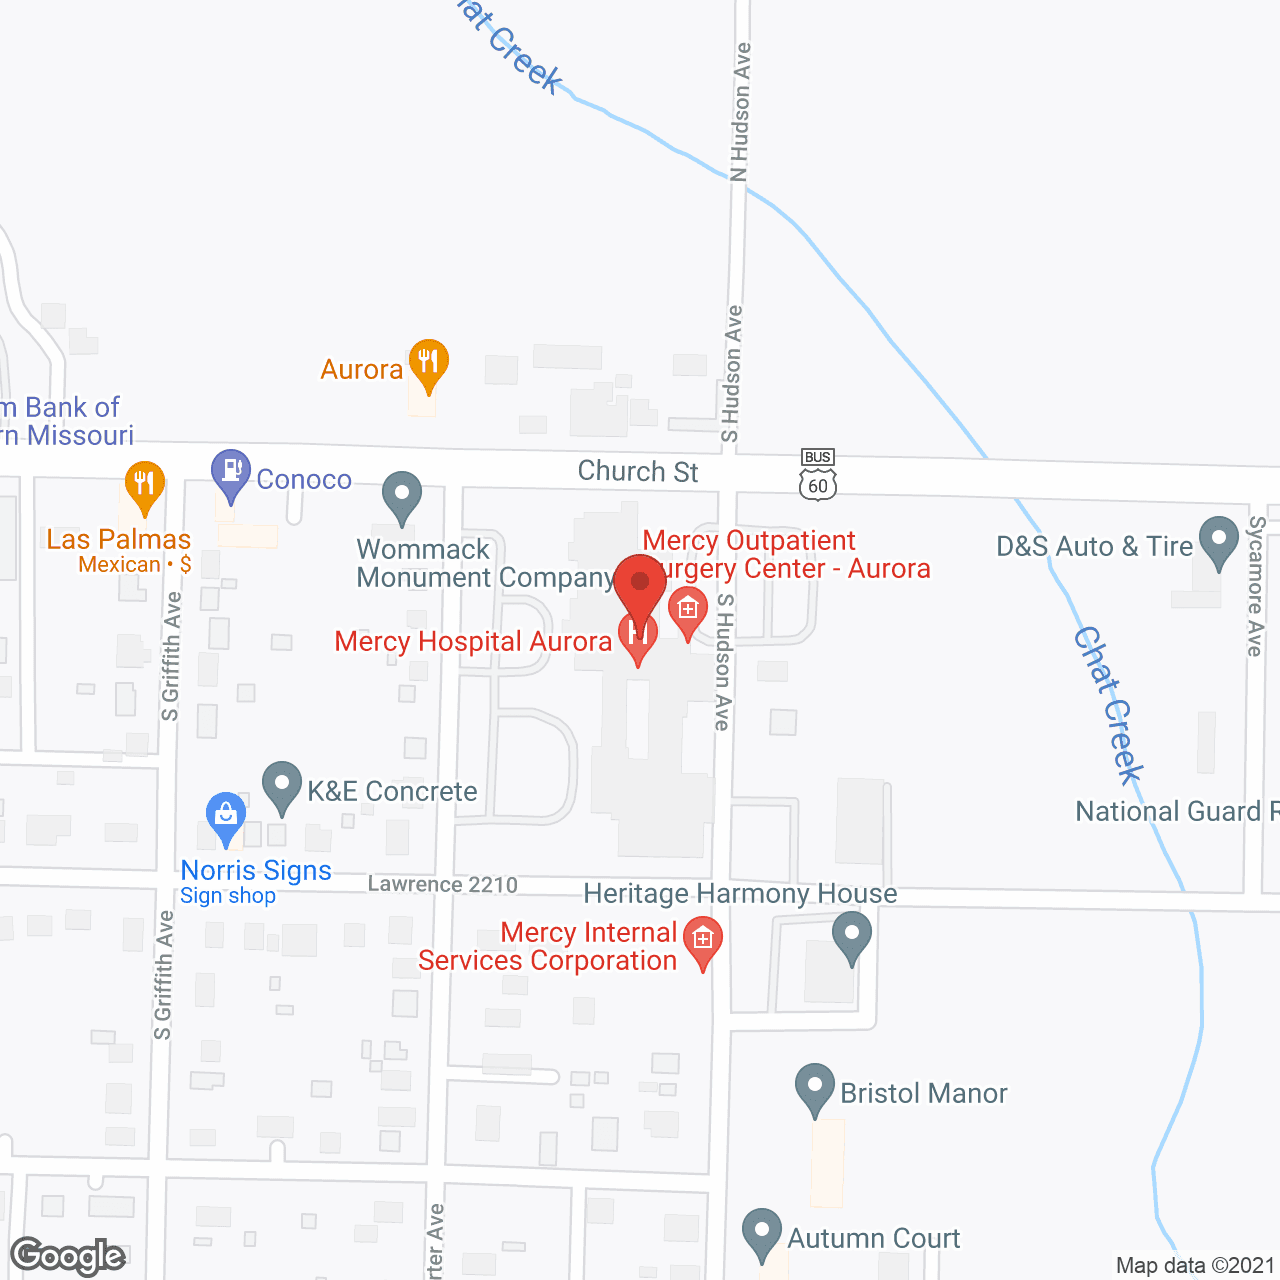 St John's Hospital-Aurora in google map